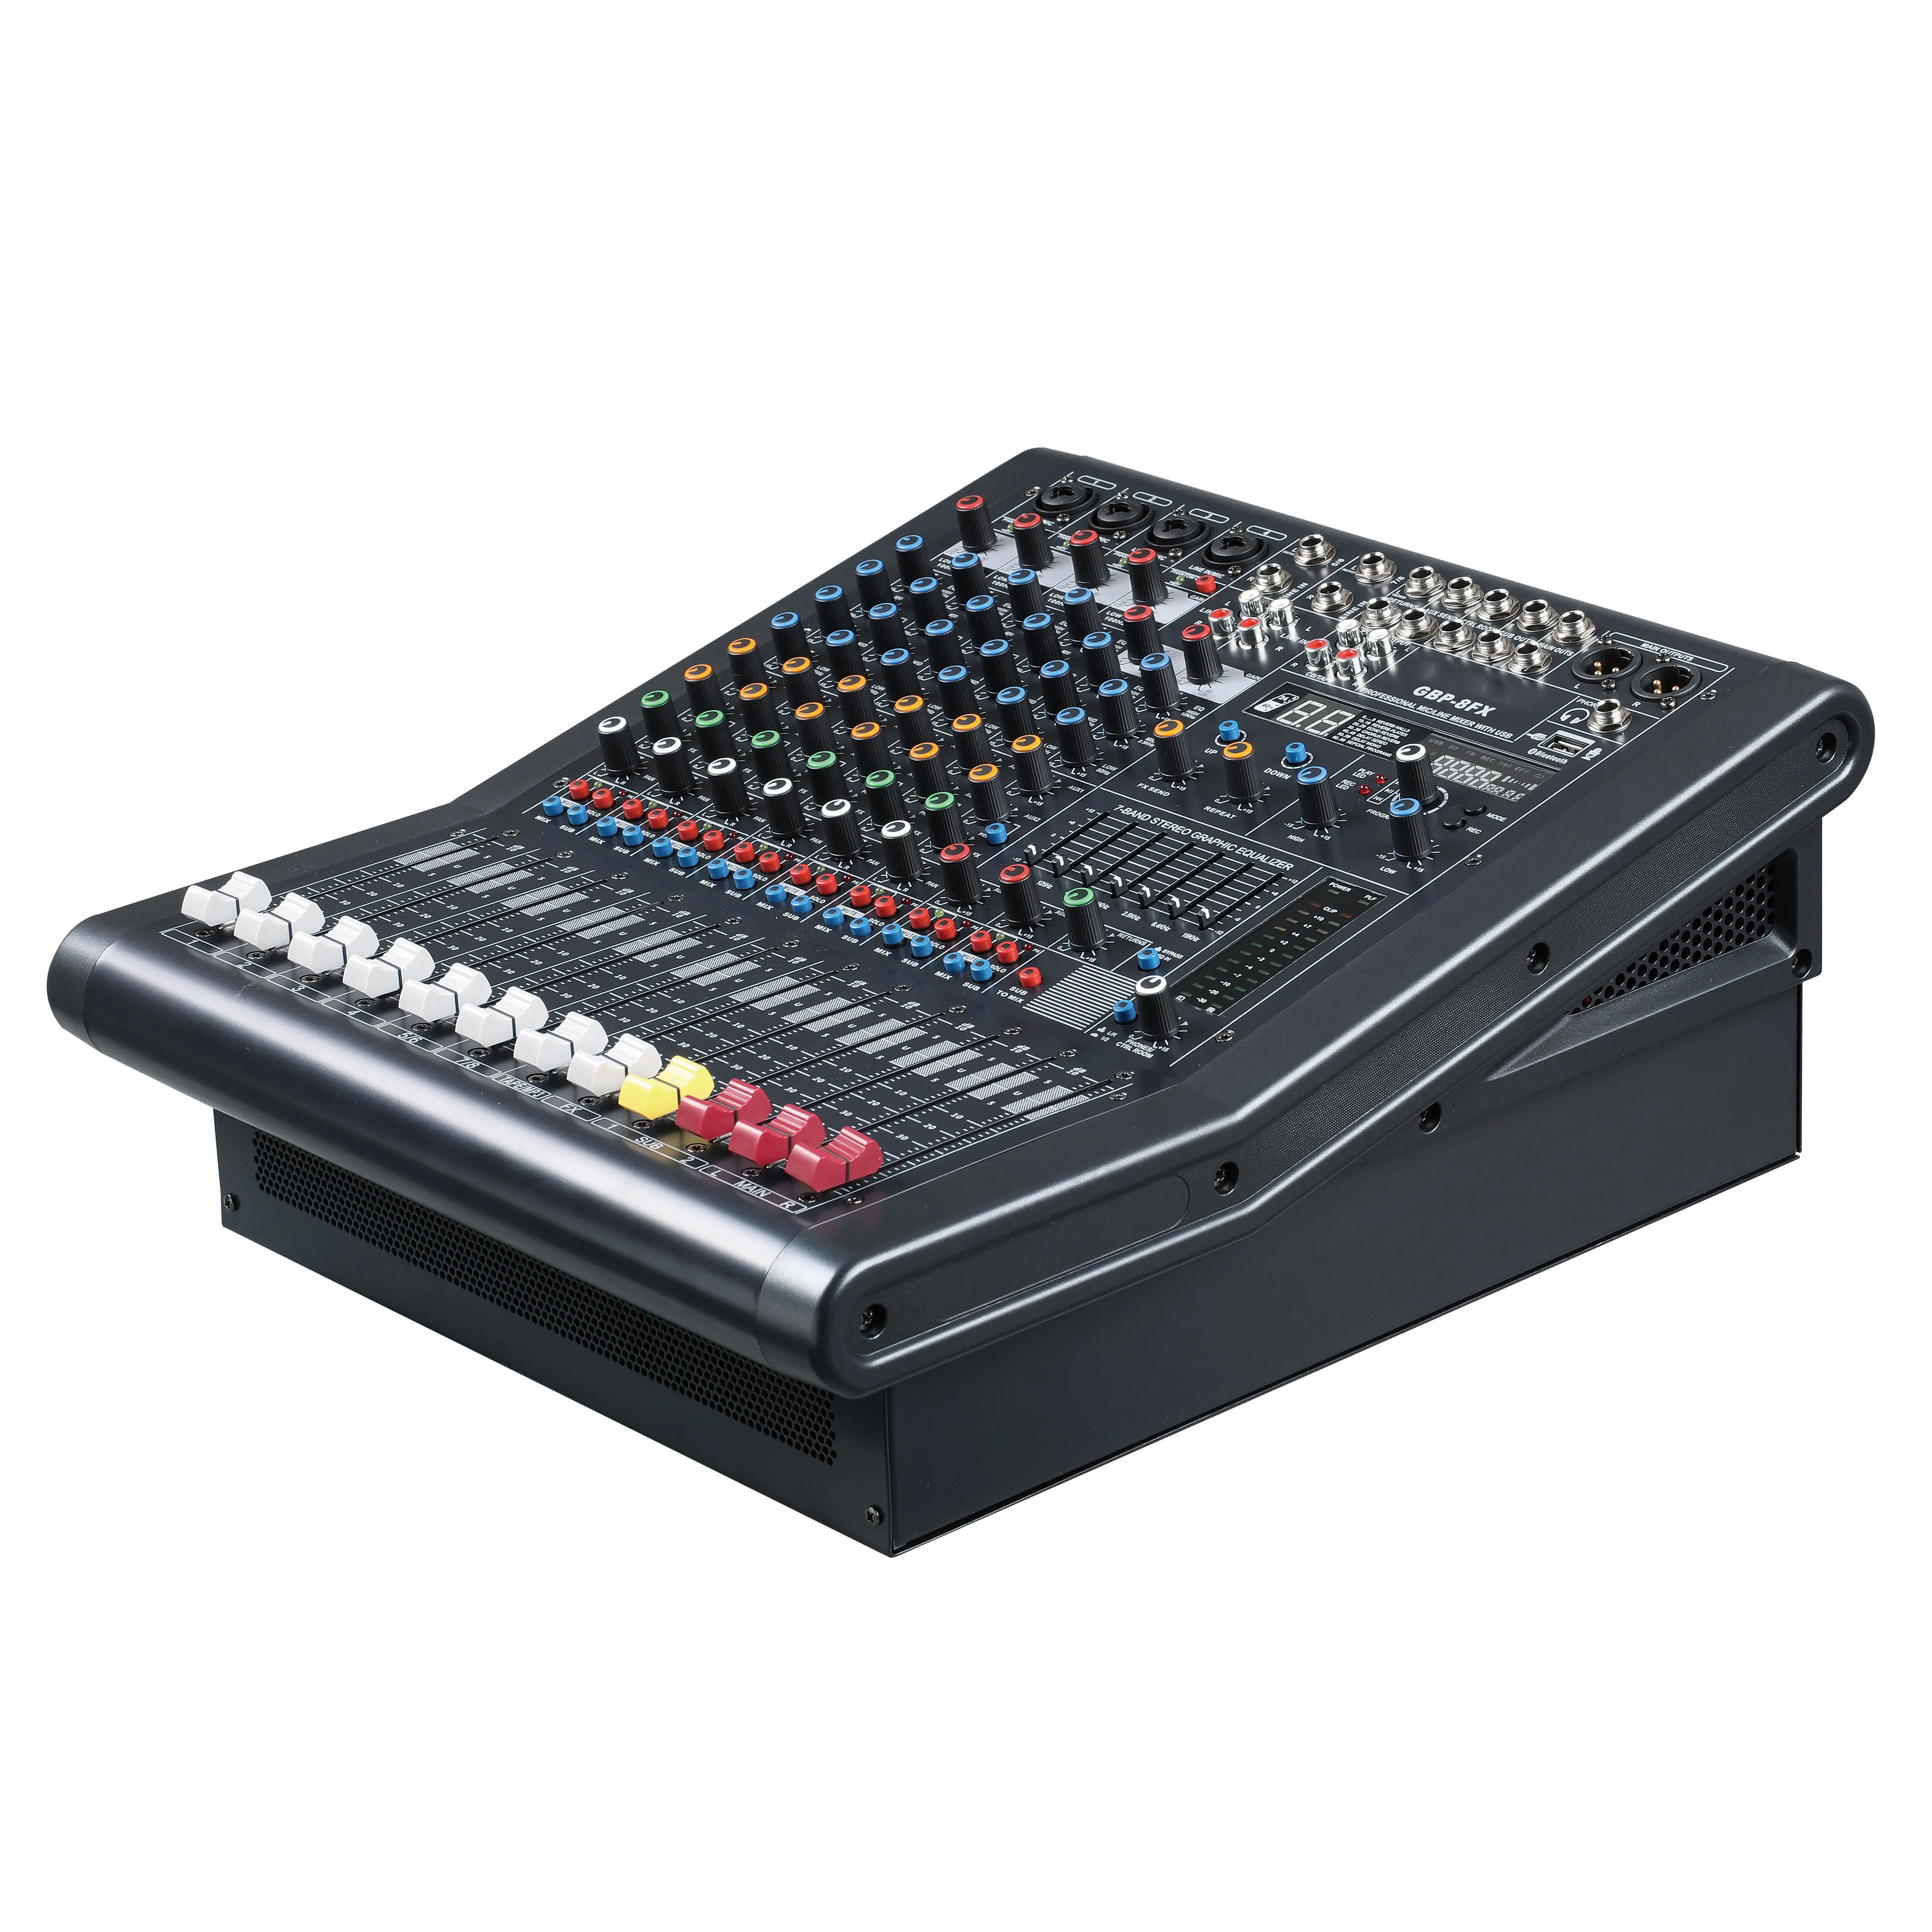 Hohe Qualität Professionelle PA System OEM 16 Kanal Digitale Soundkarte Audio Mischpult Mixer